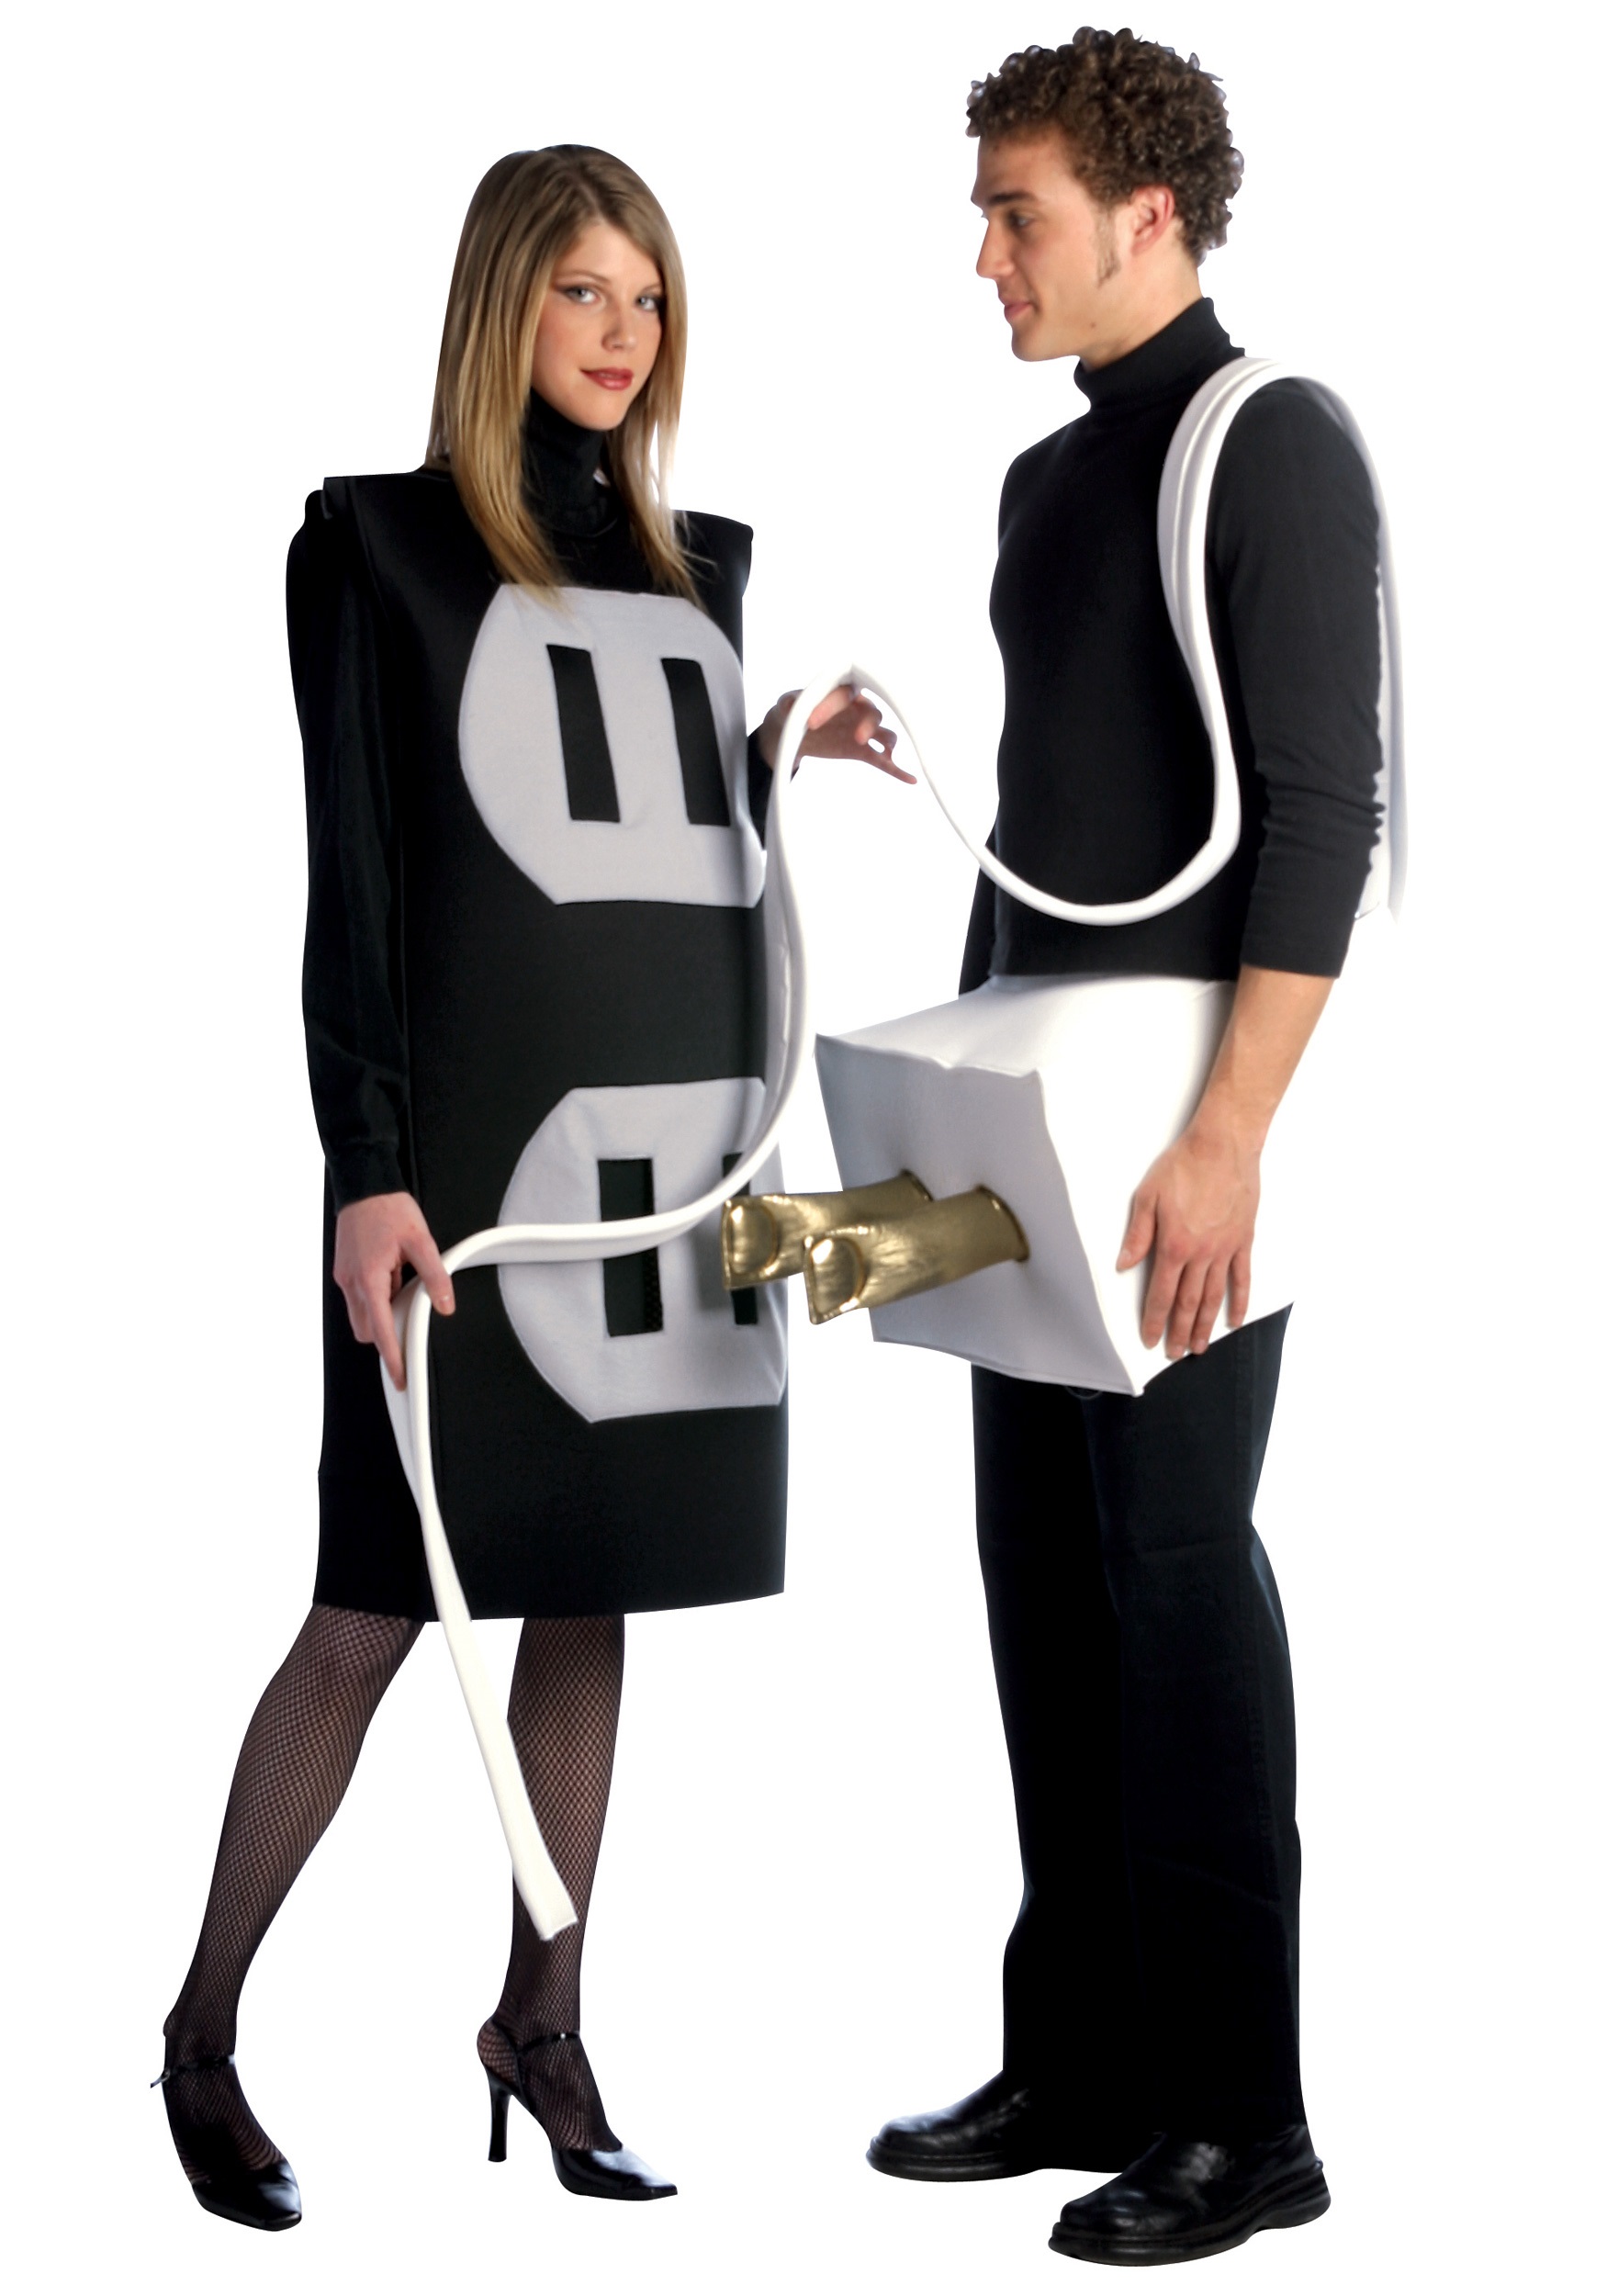 Plug and Socket Costume - Funny Couples Costume Ideas